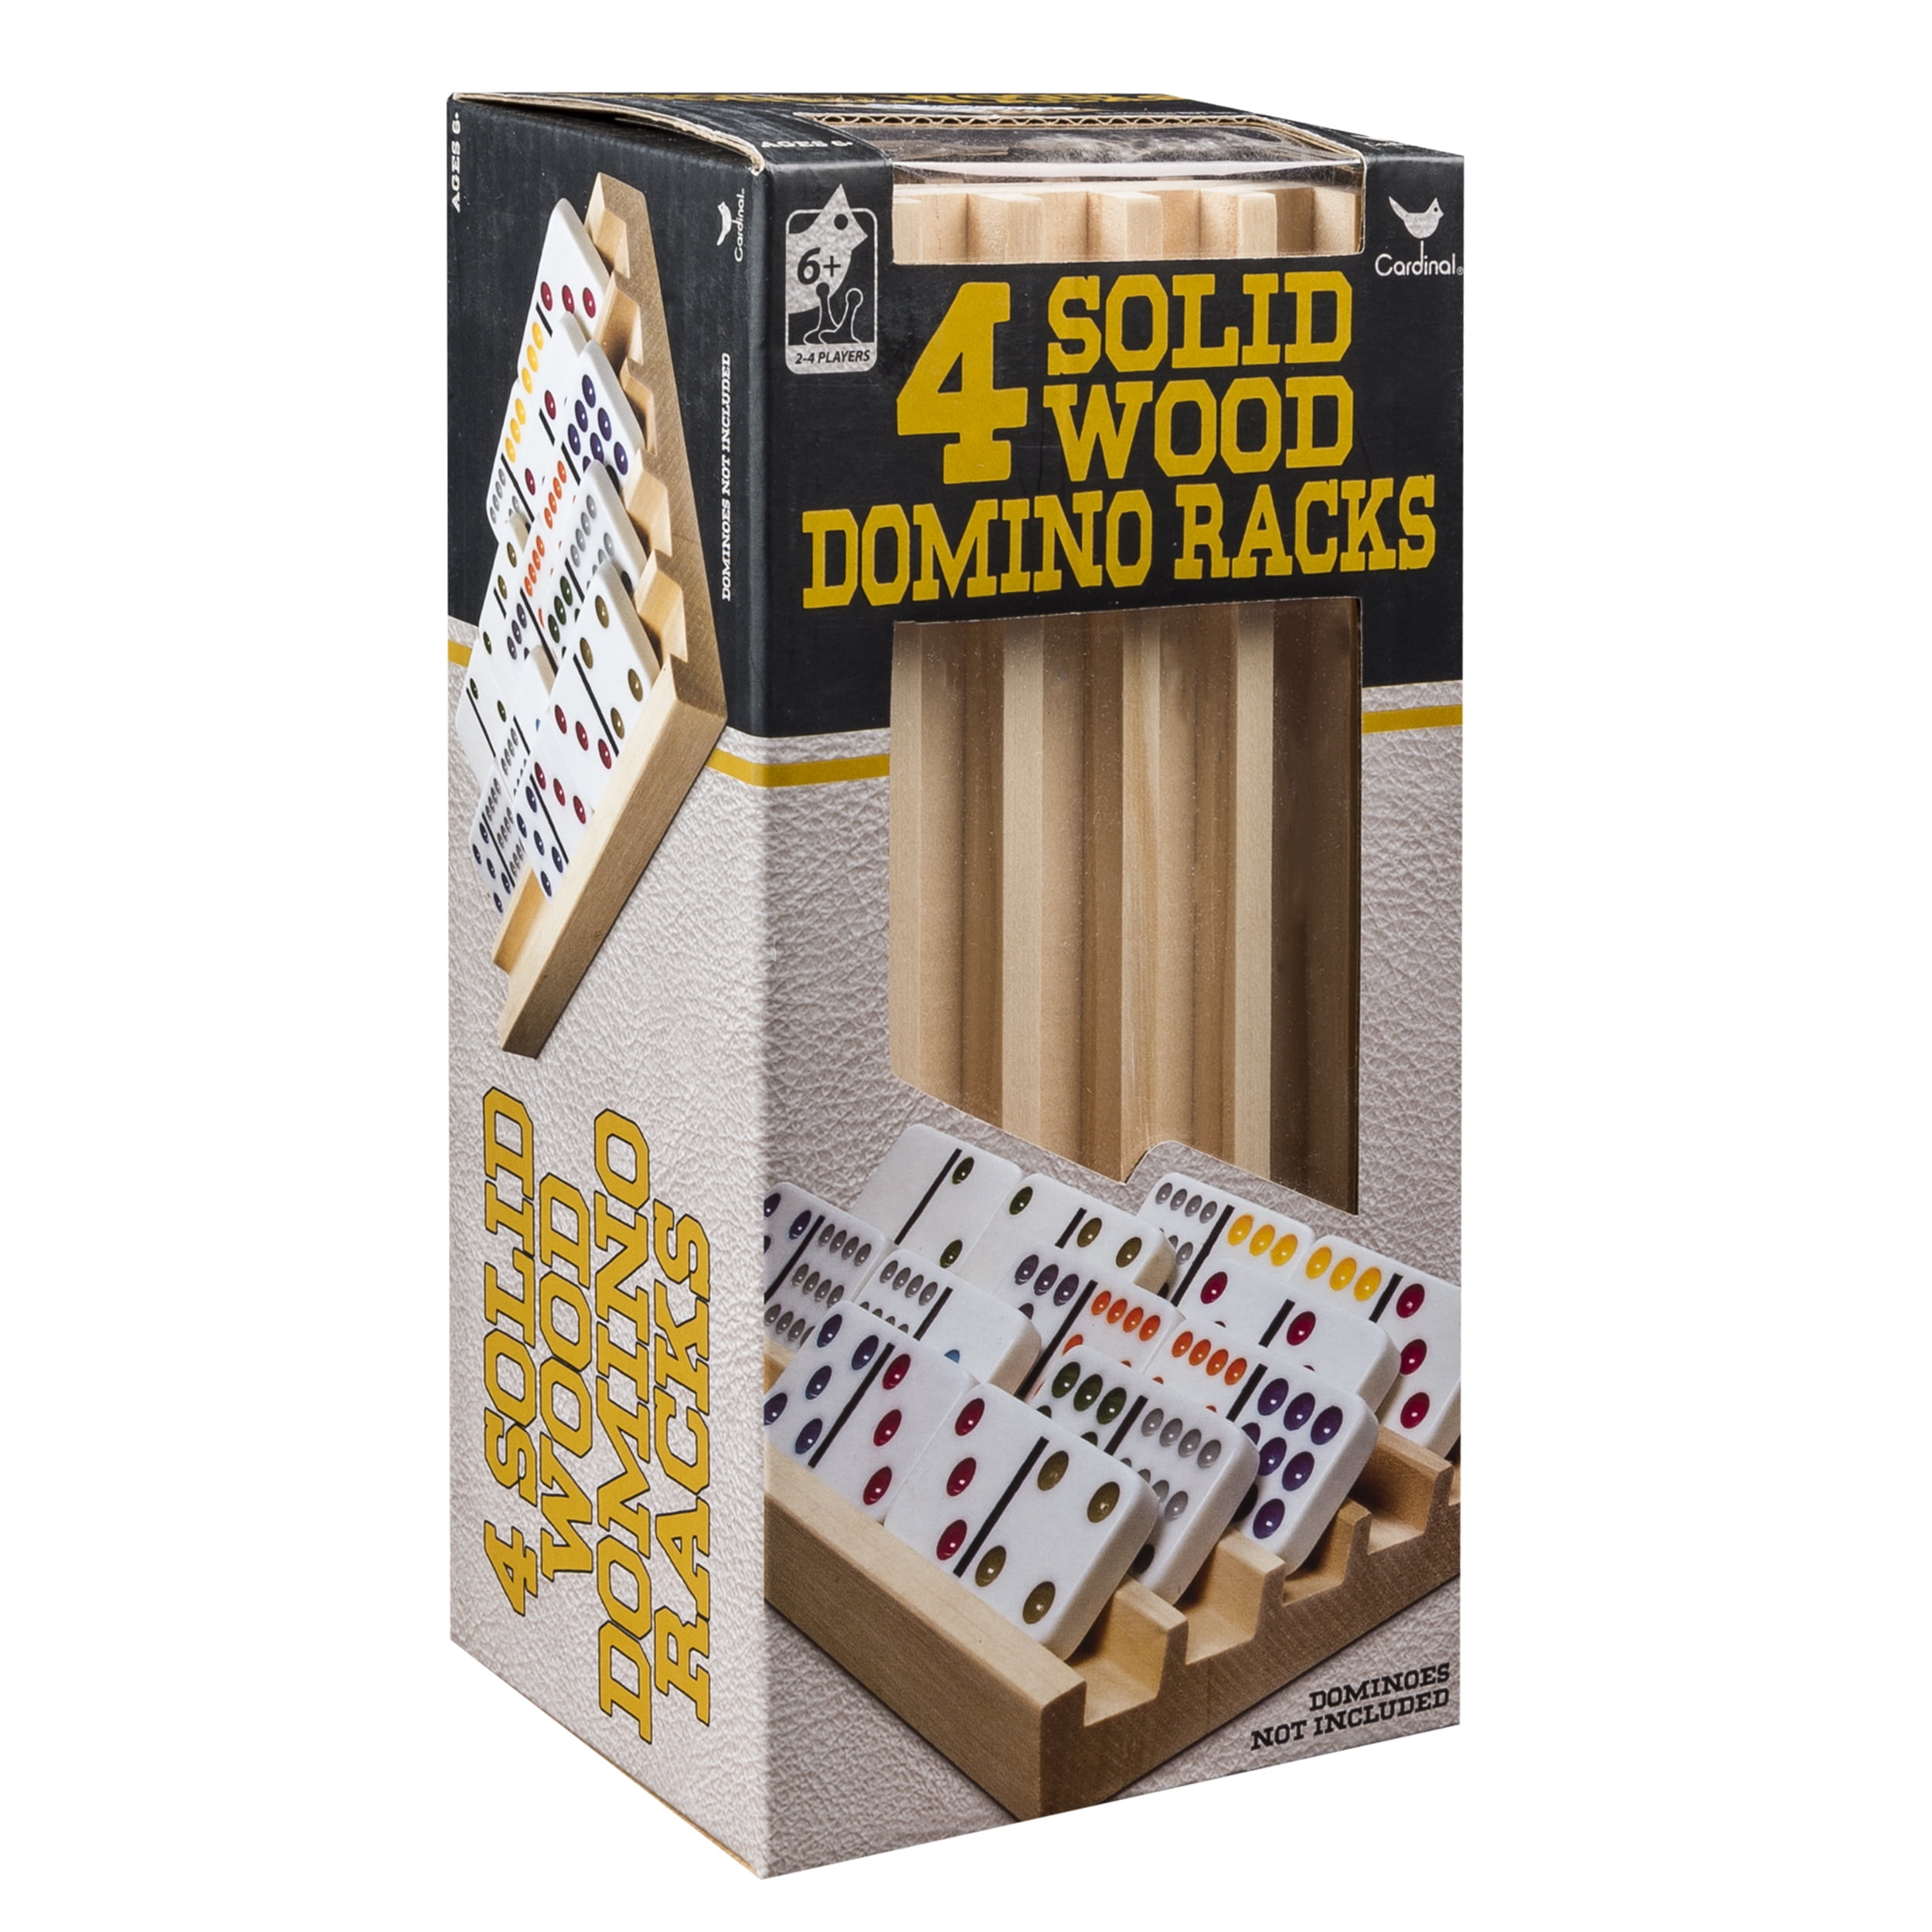 Dominoes Not Included 4 Solid Wood Domino Racks